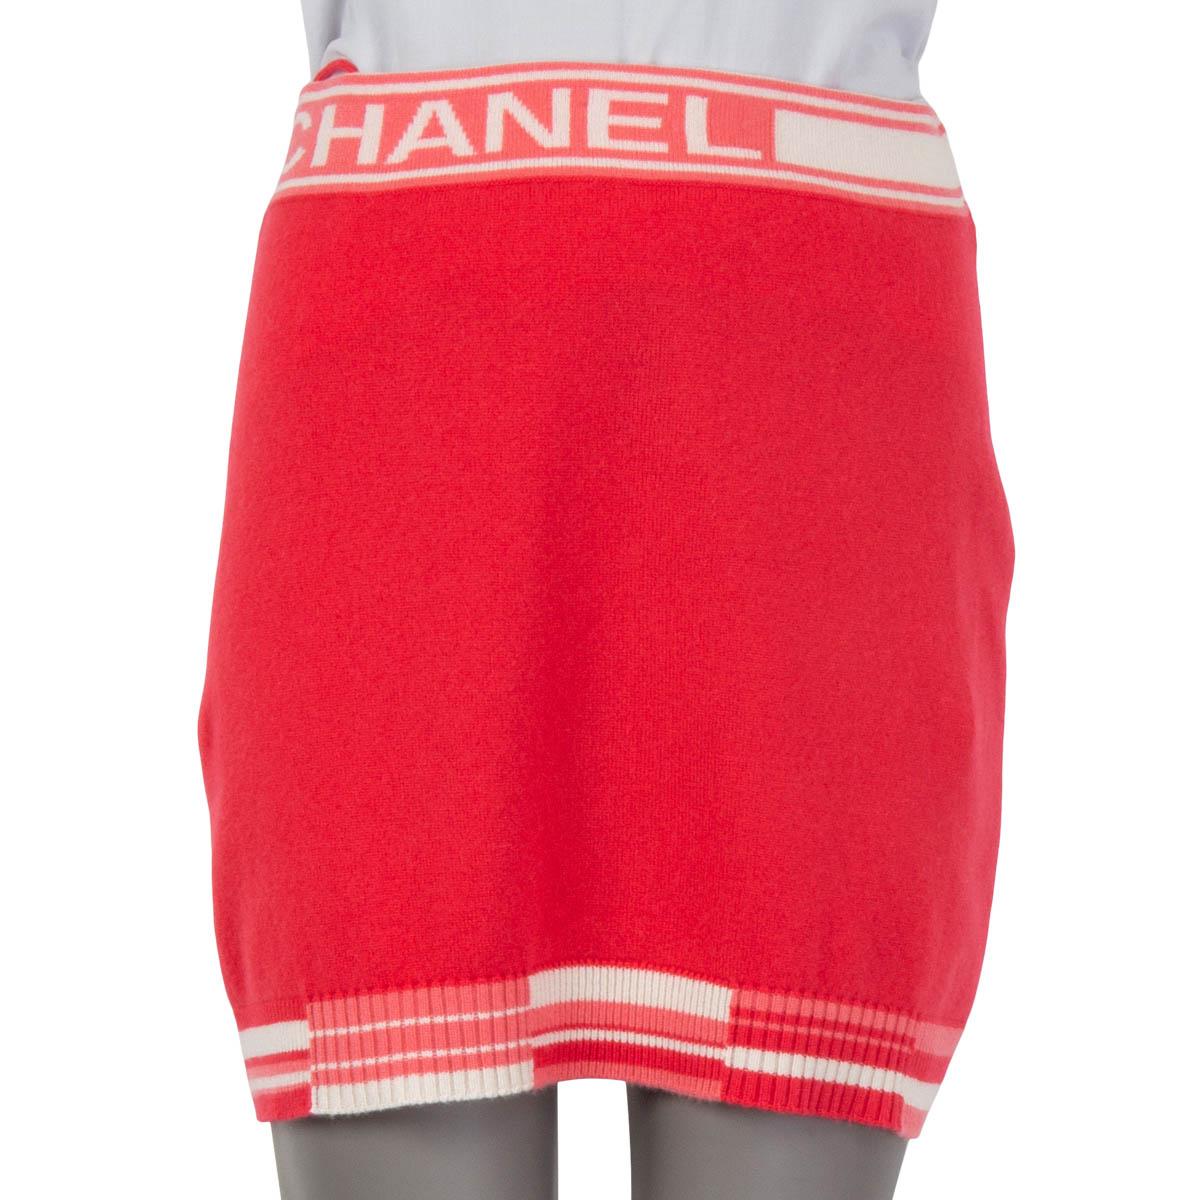 chanel tennis skirt